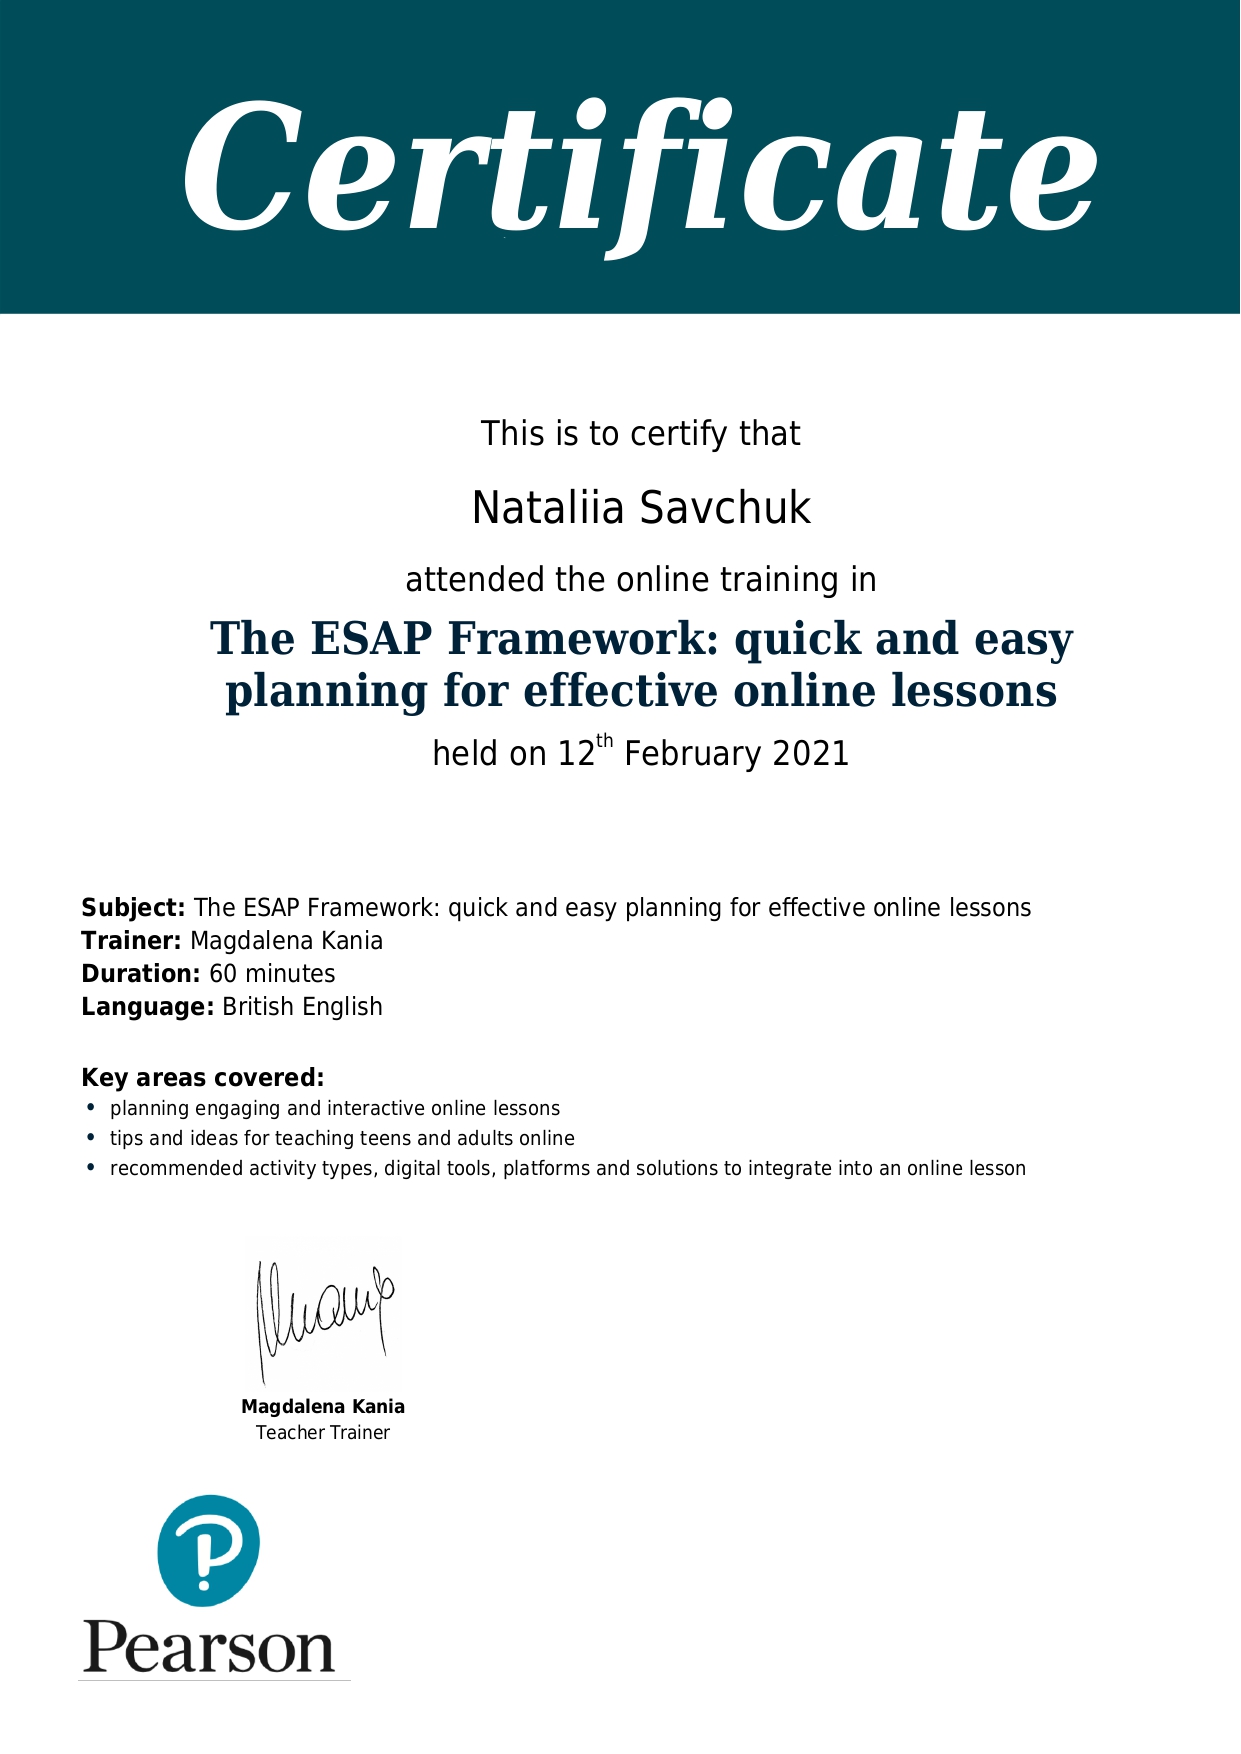 Certificate online training